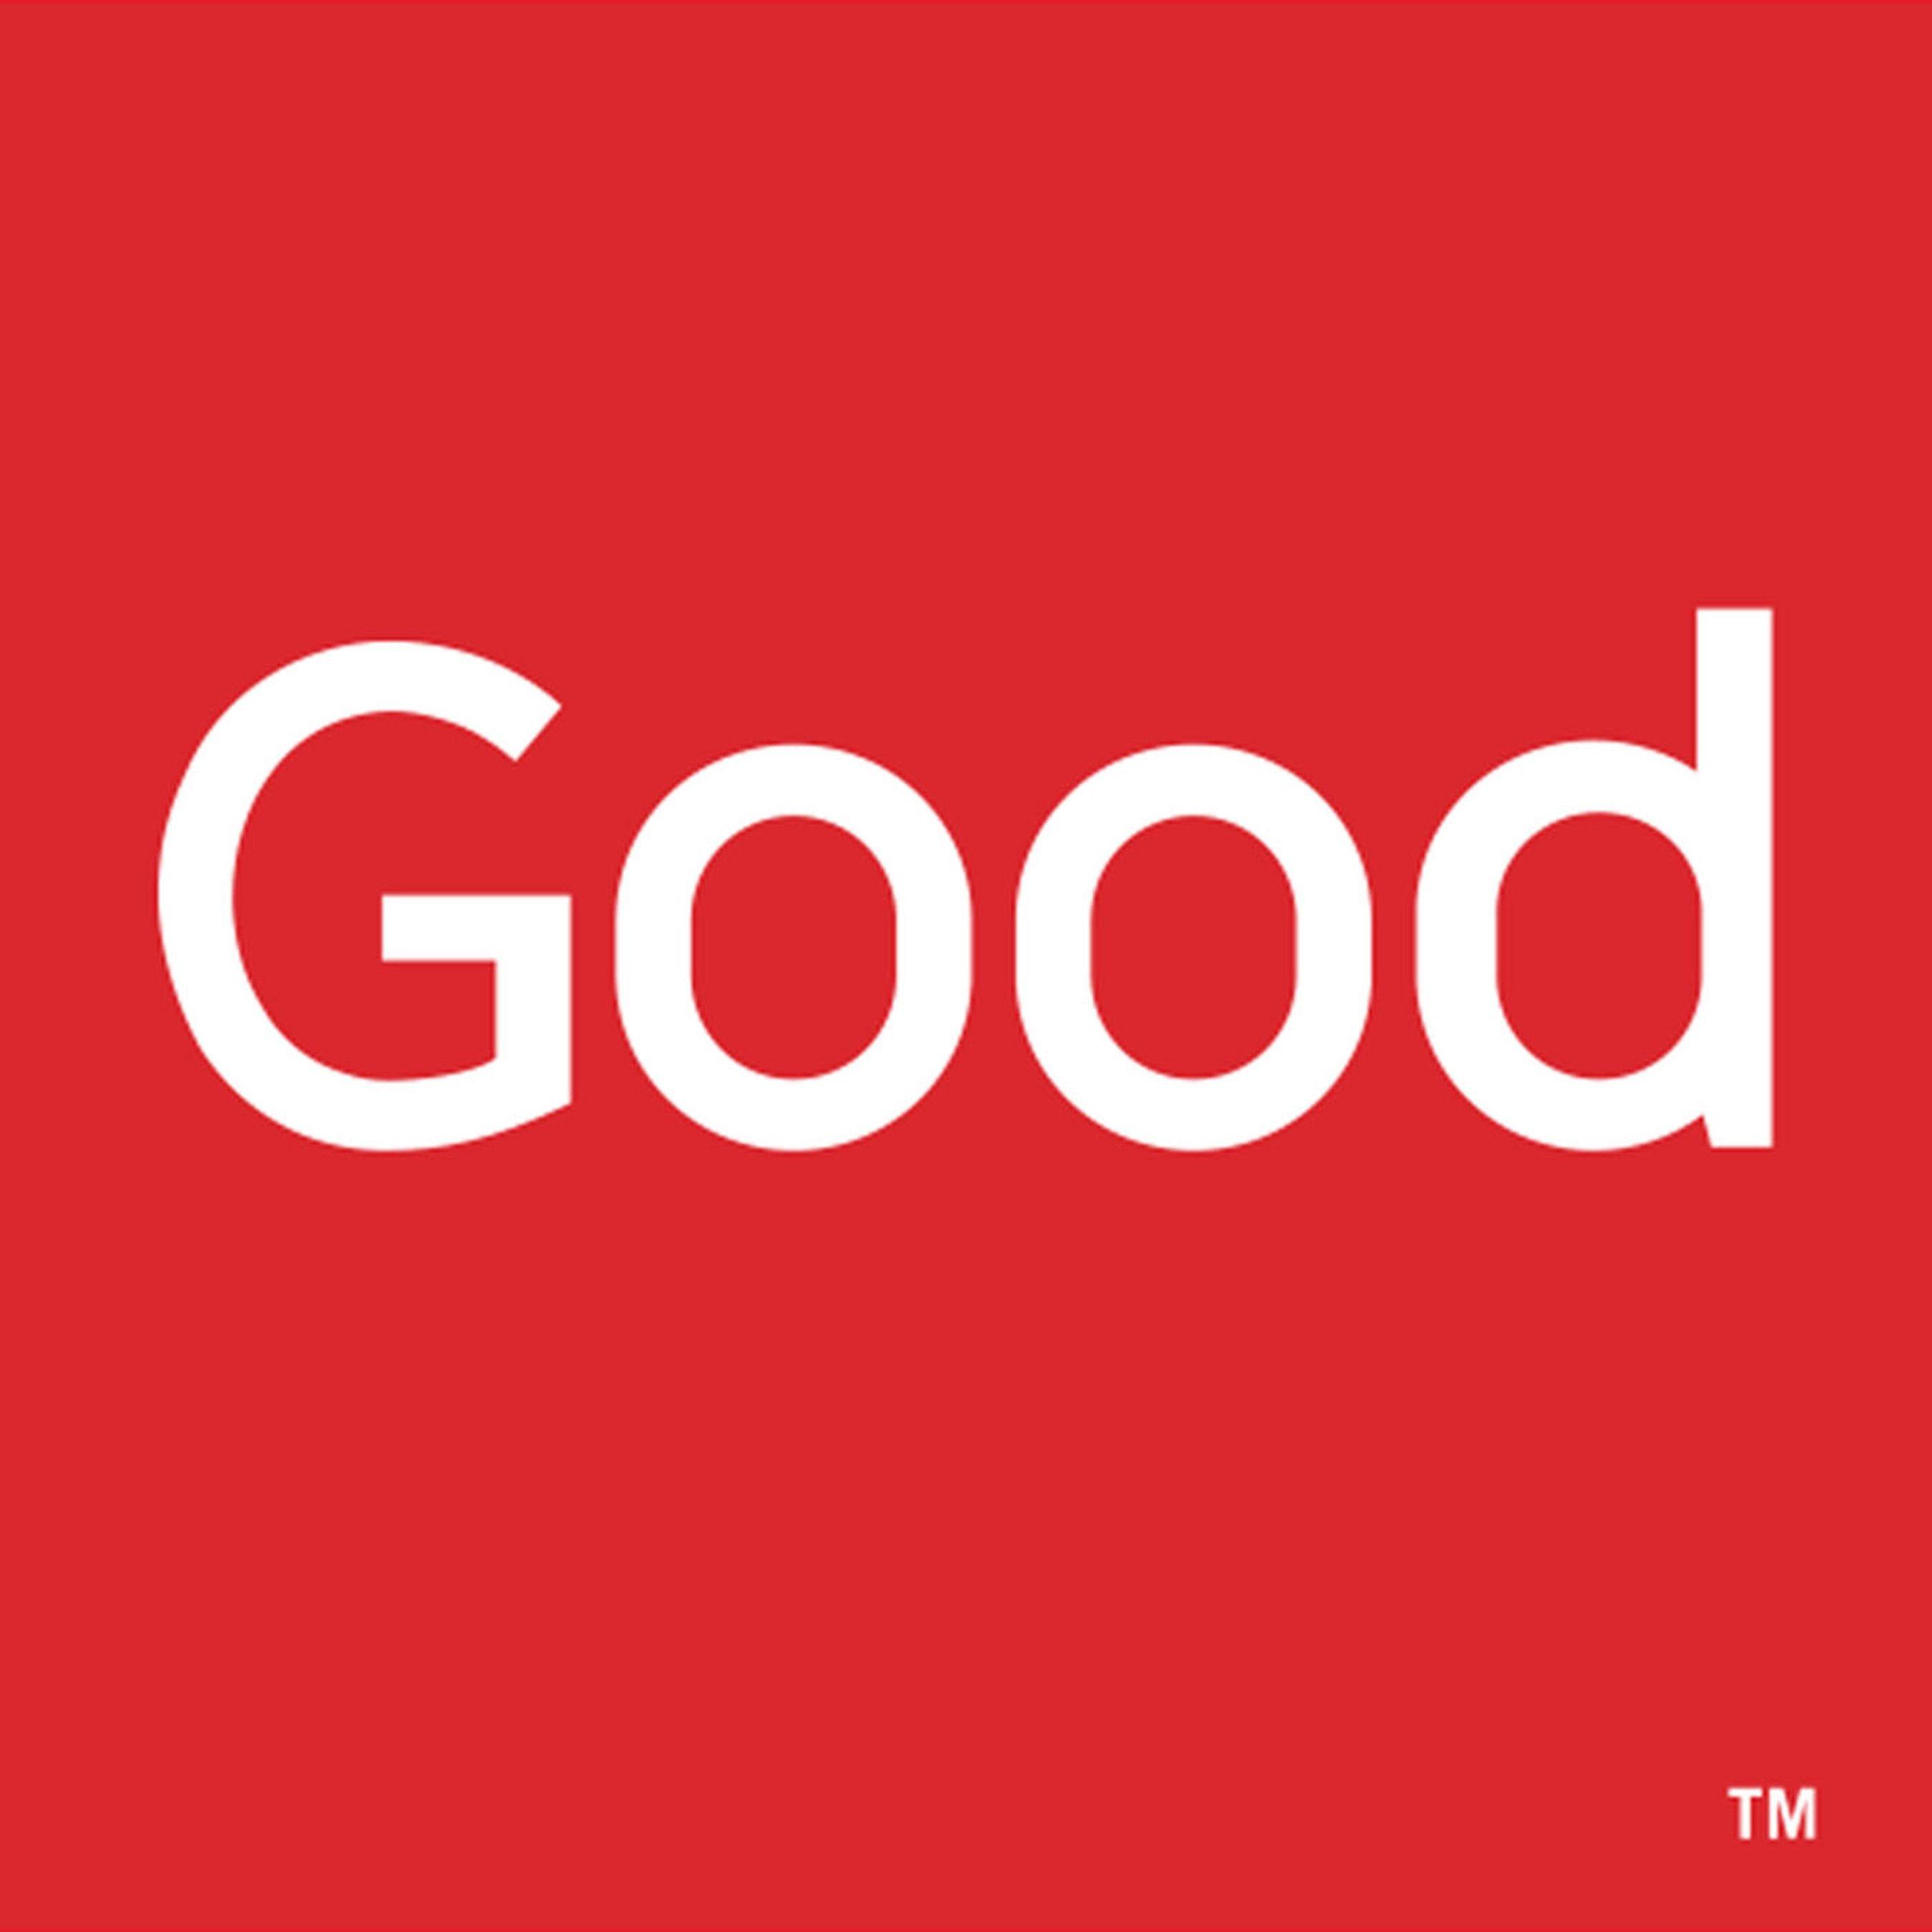 Good App Logo - U.S. Navy Chooses Good Technology to Secure Cross Platform Mobile